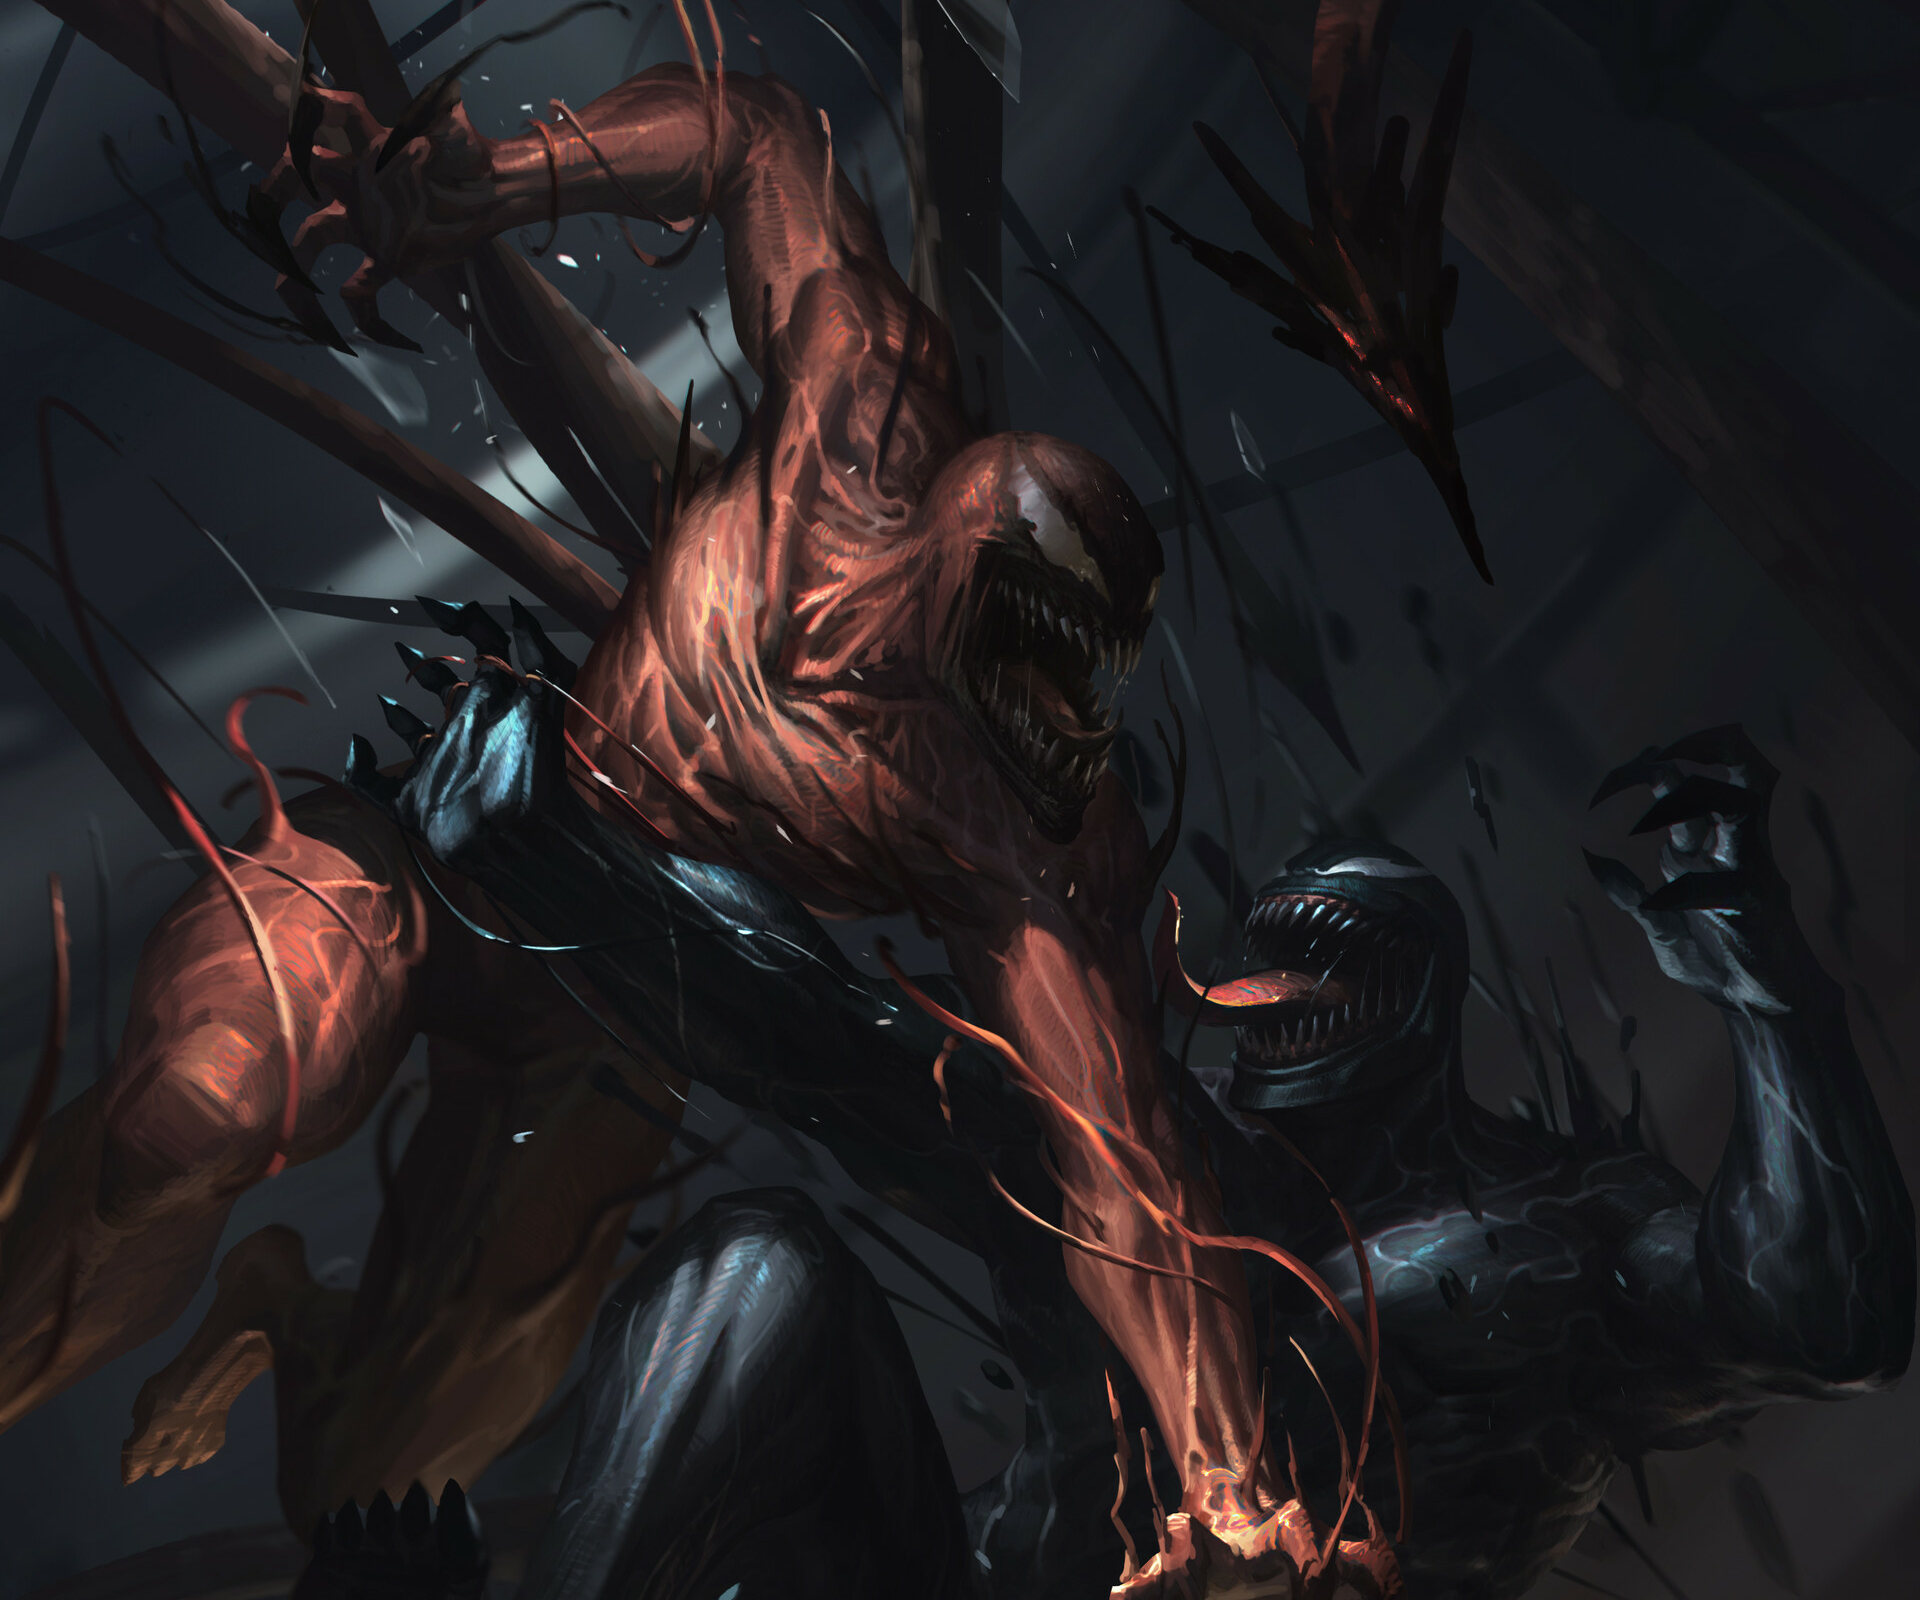 Carnage vs Venom by Lee J.P